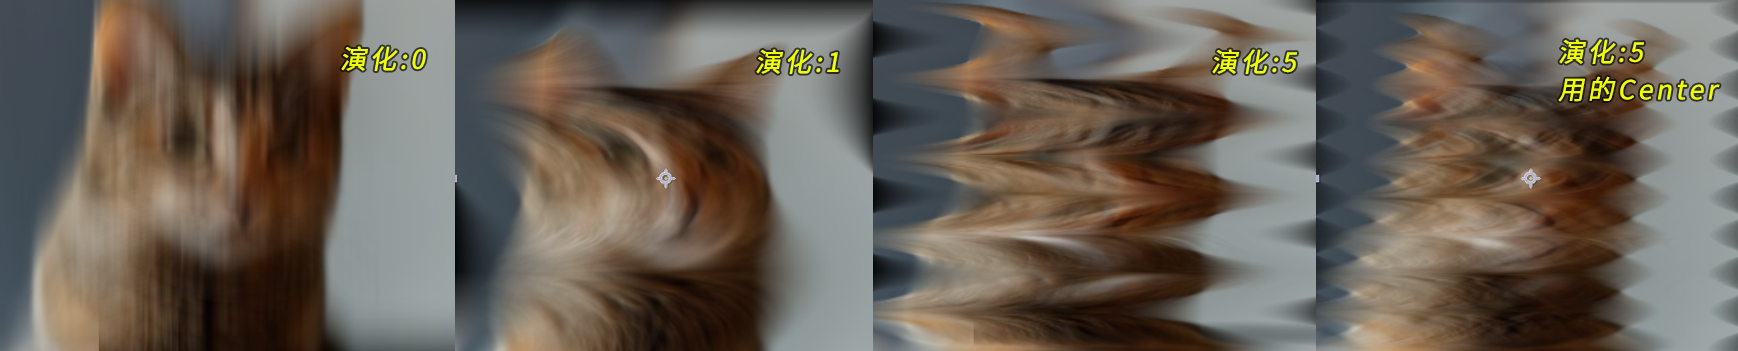 CC Vector Blur - CC矢量模糊.md - 图6